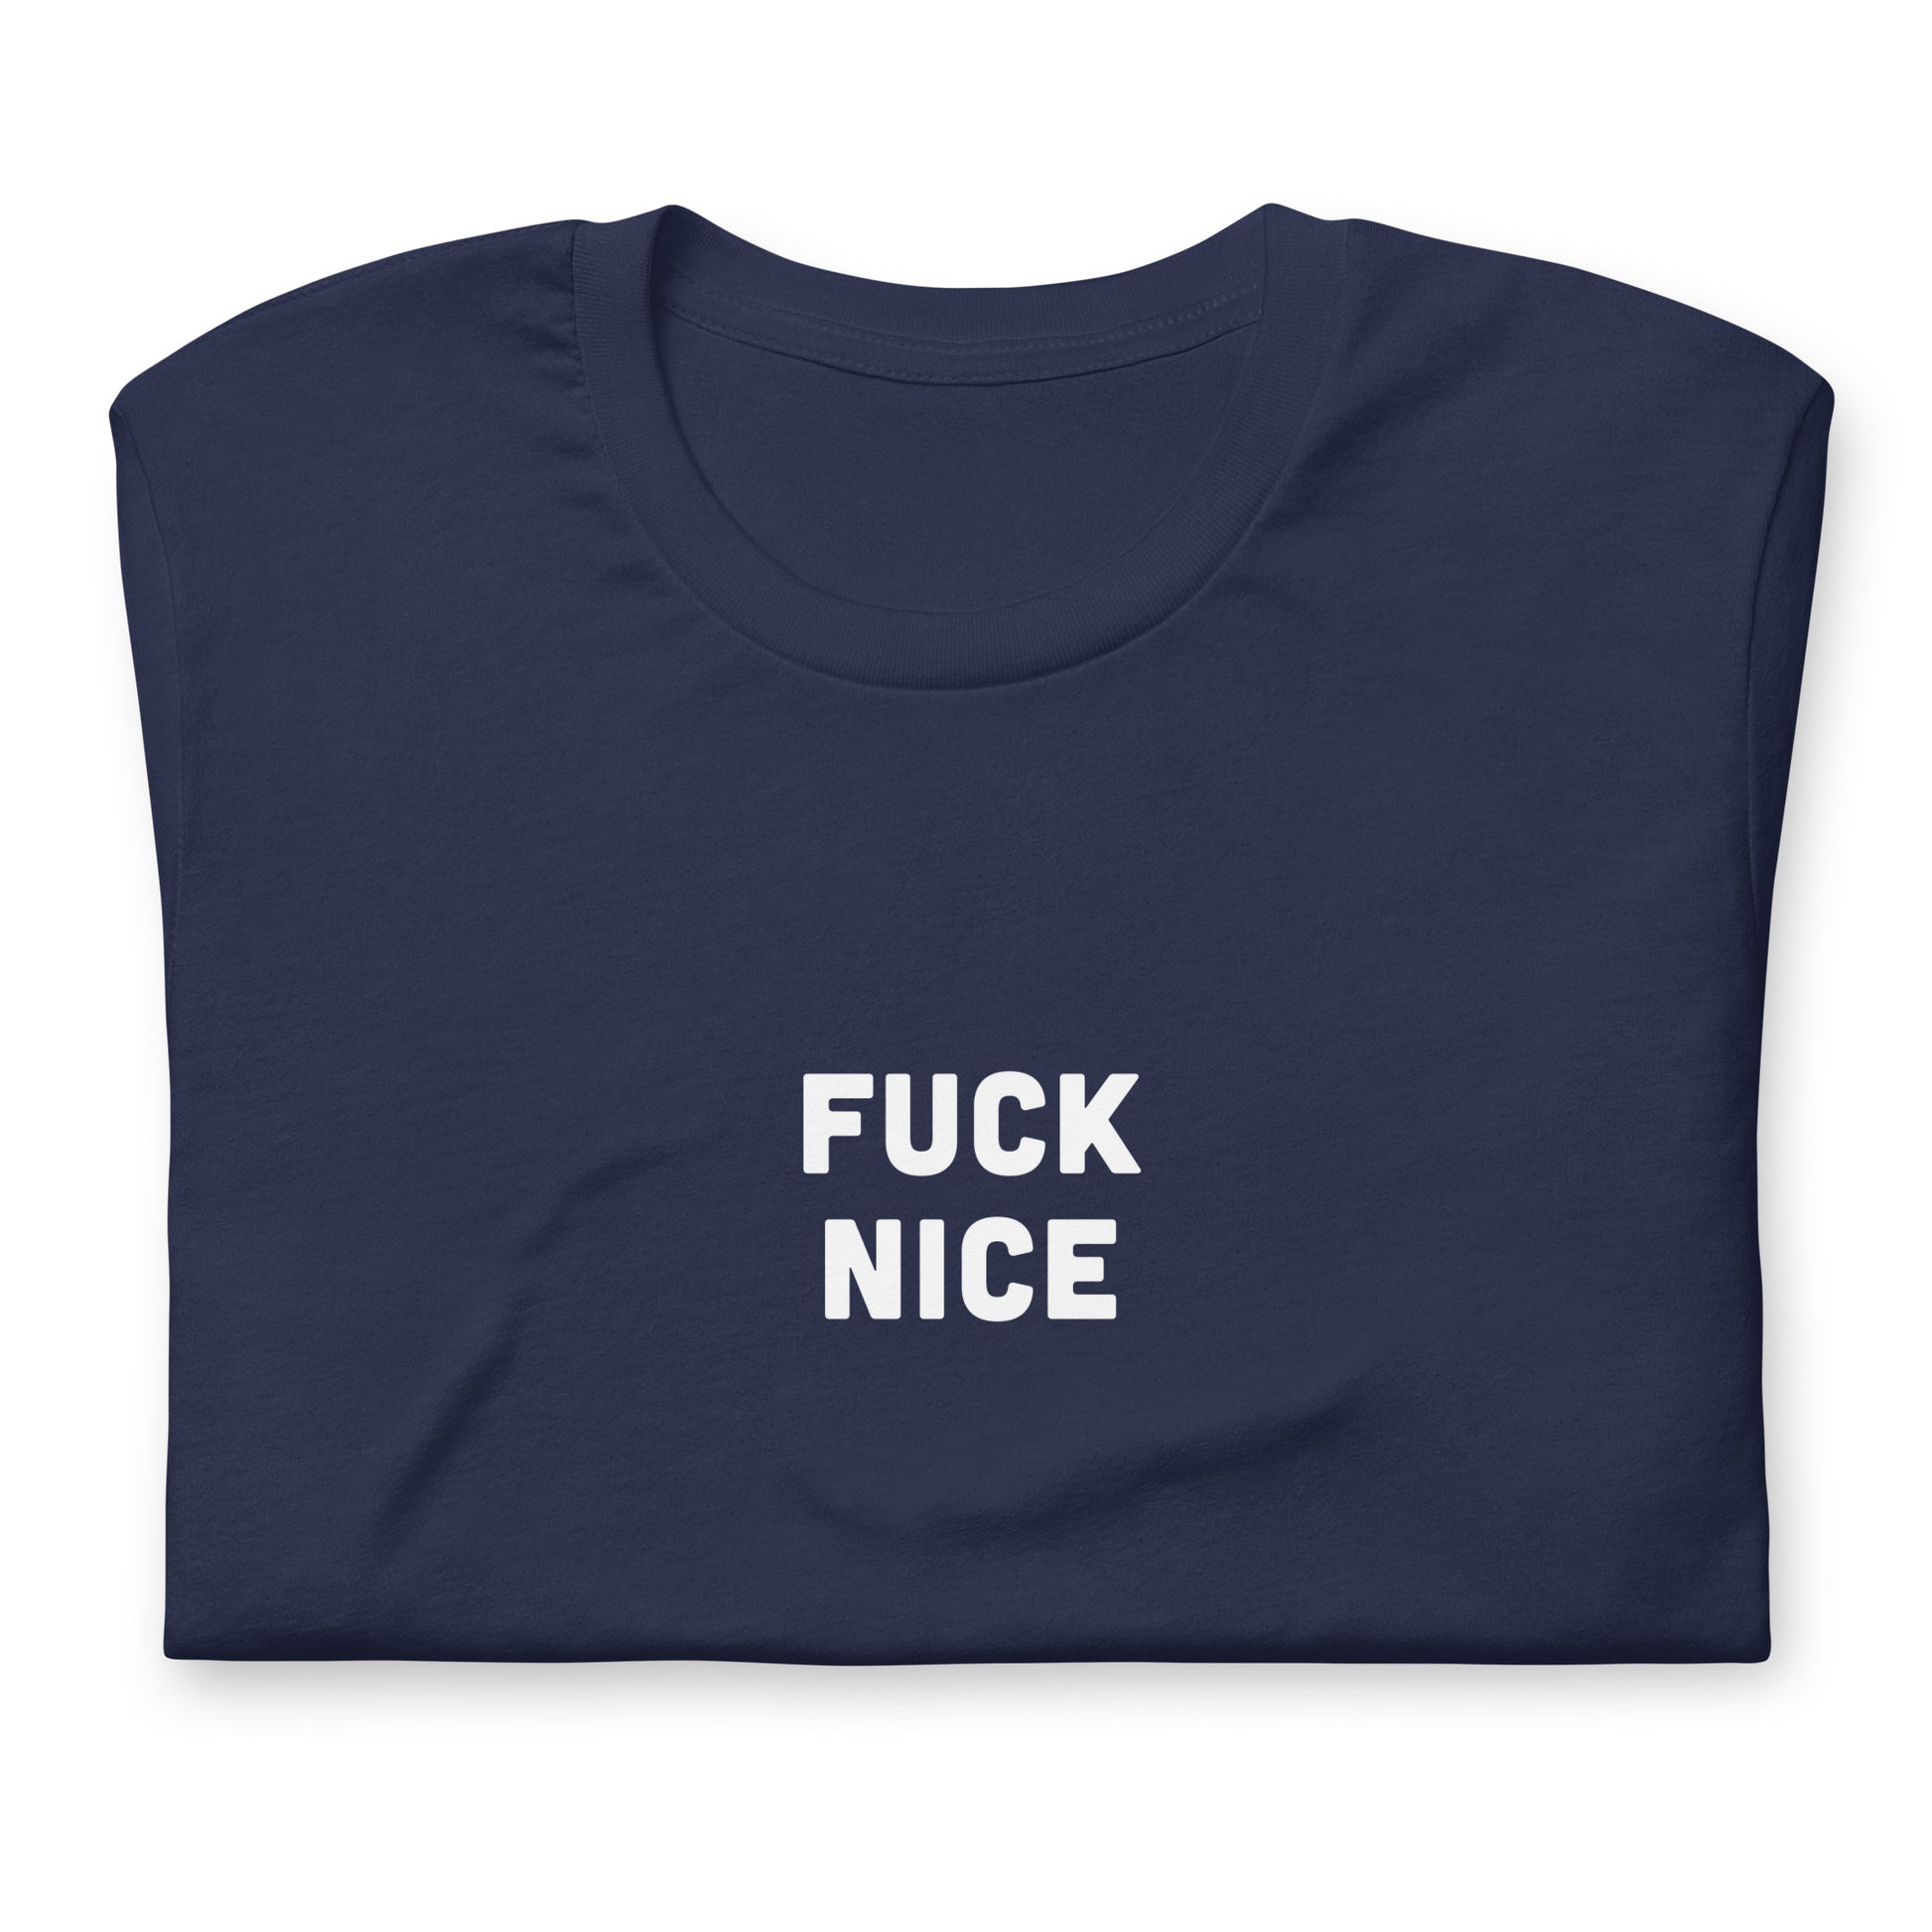 Fuck Nice T-Shirt Size L Color Black